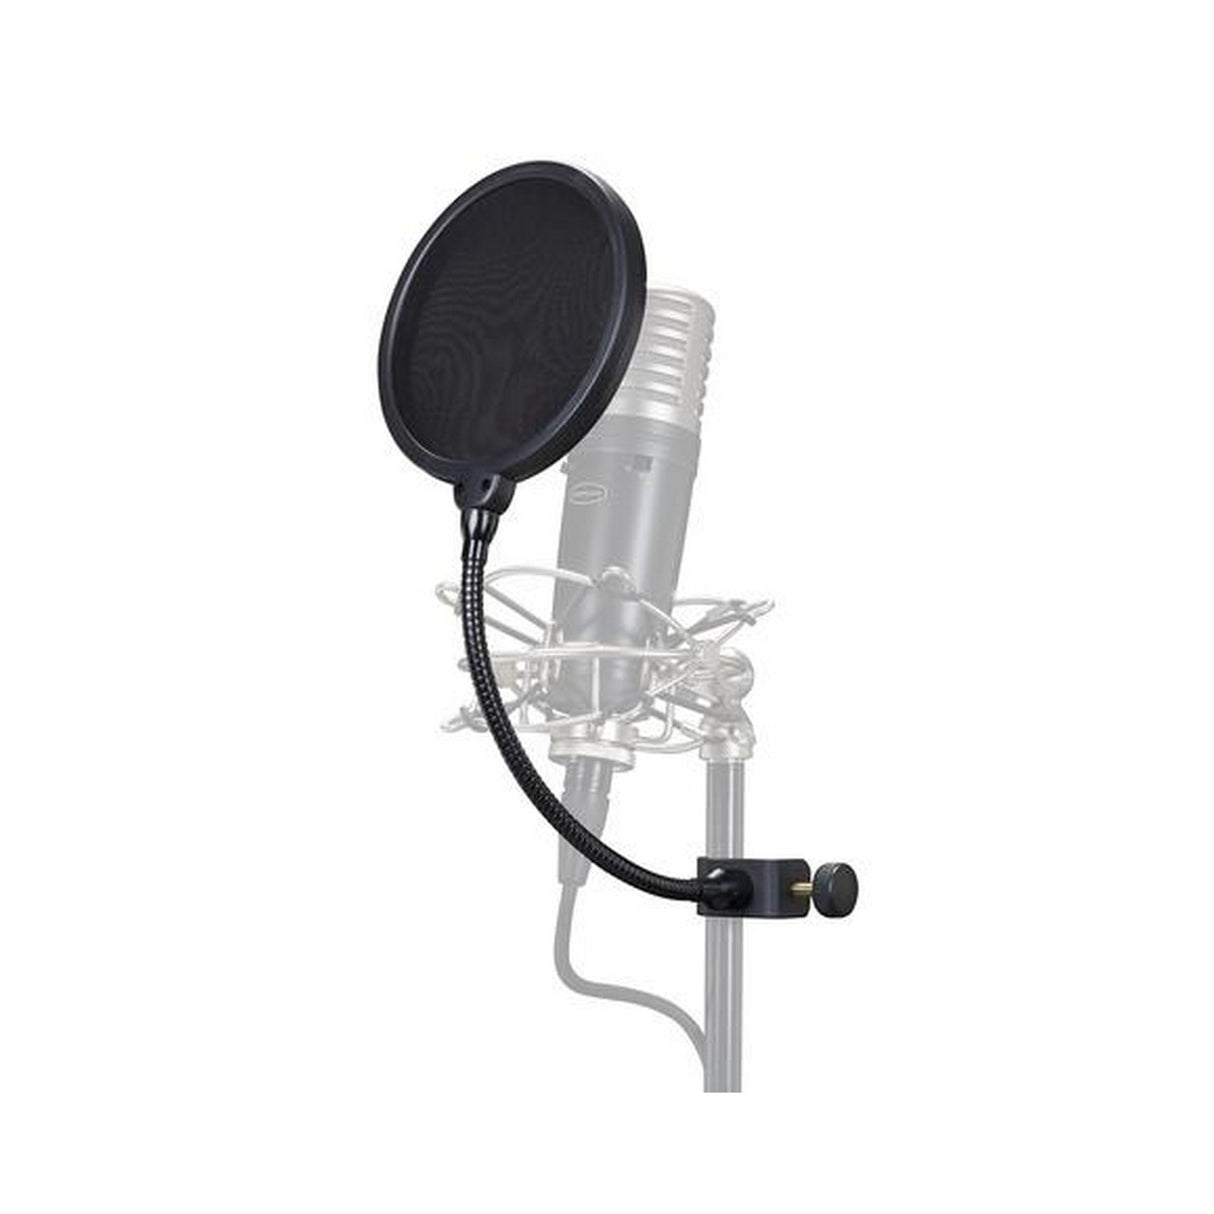 Samson PS04 8-Inch Gooseneck Microphone Pop Filter